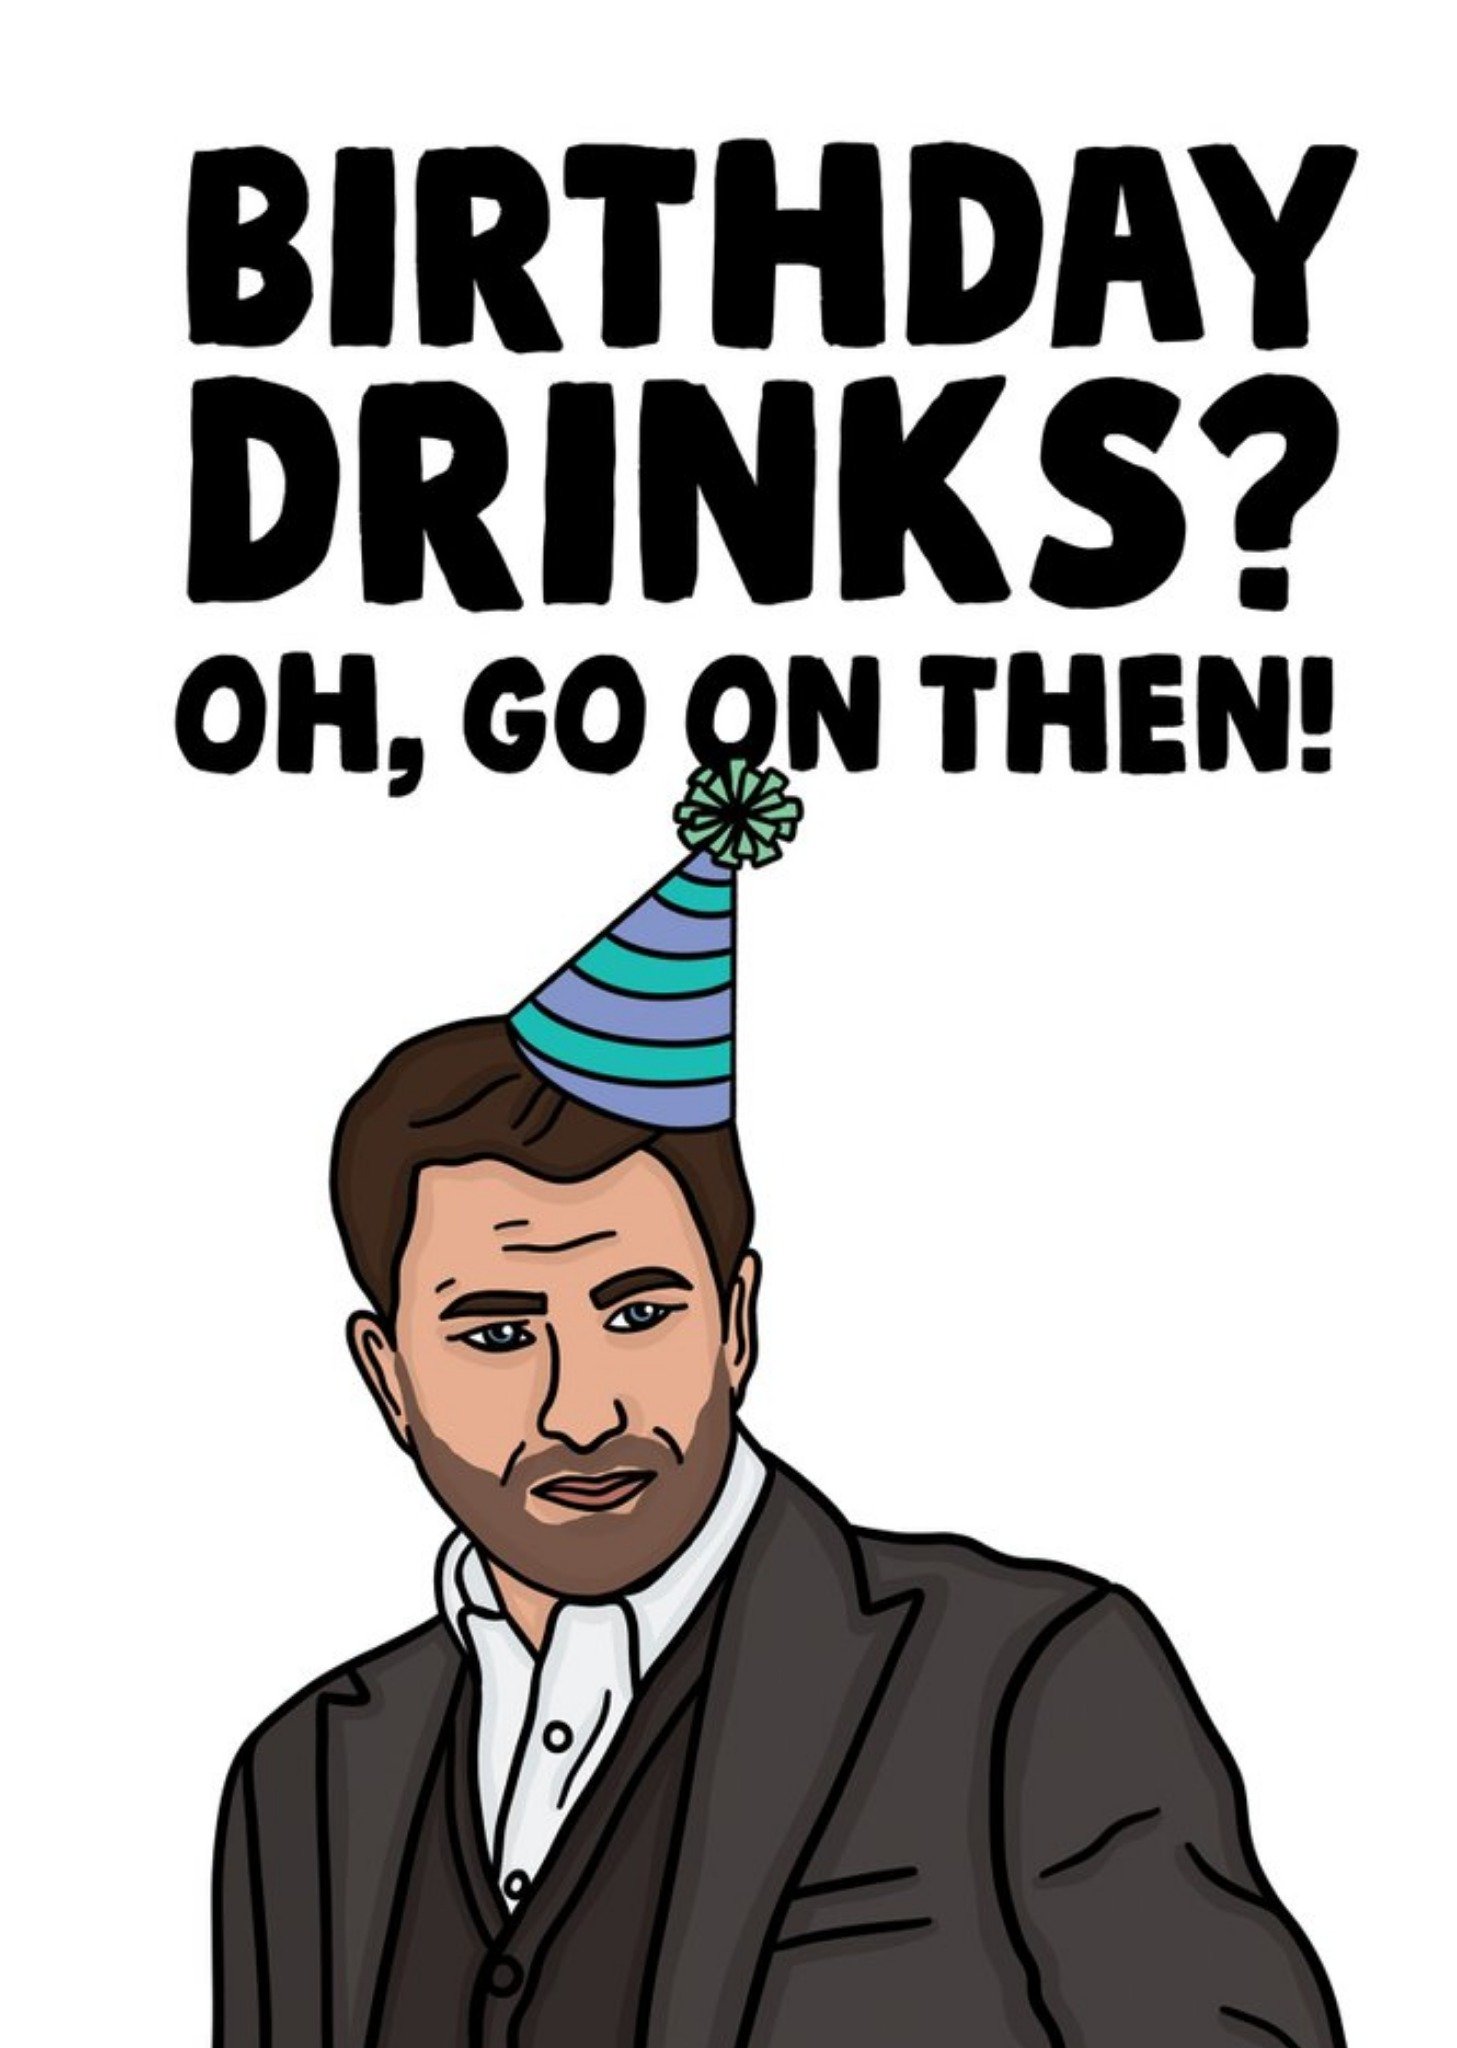 Moonpig Funny Spoof Tv Character Birthday Drinks? Oh, Go On Then Birthday Card Ecard